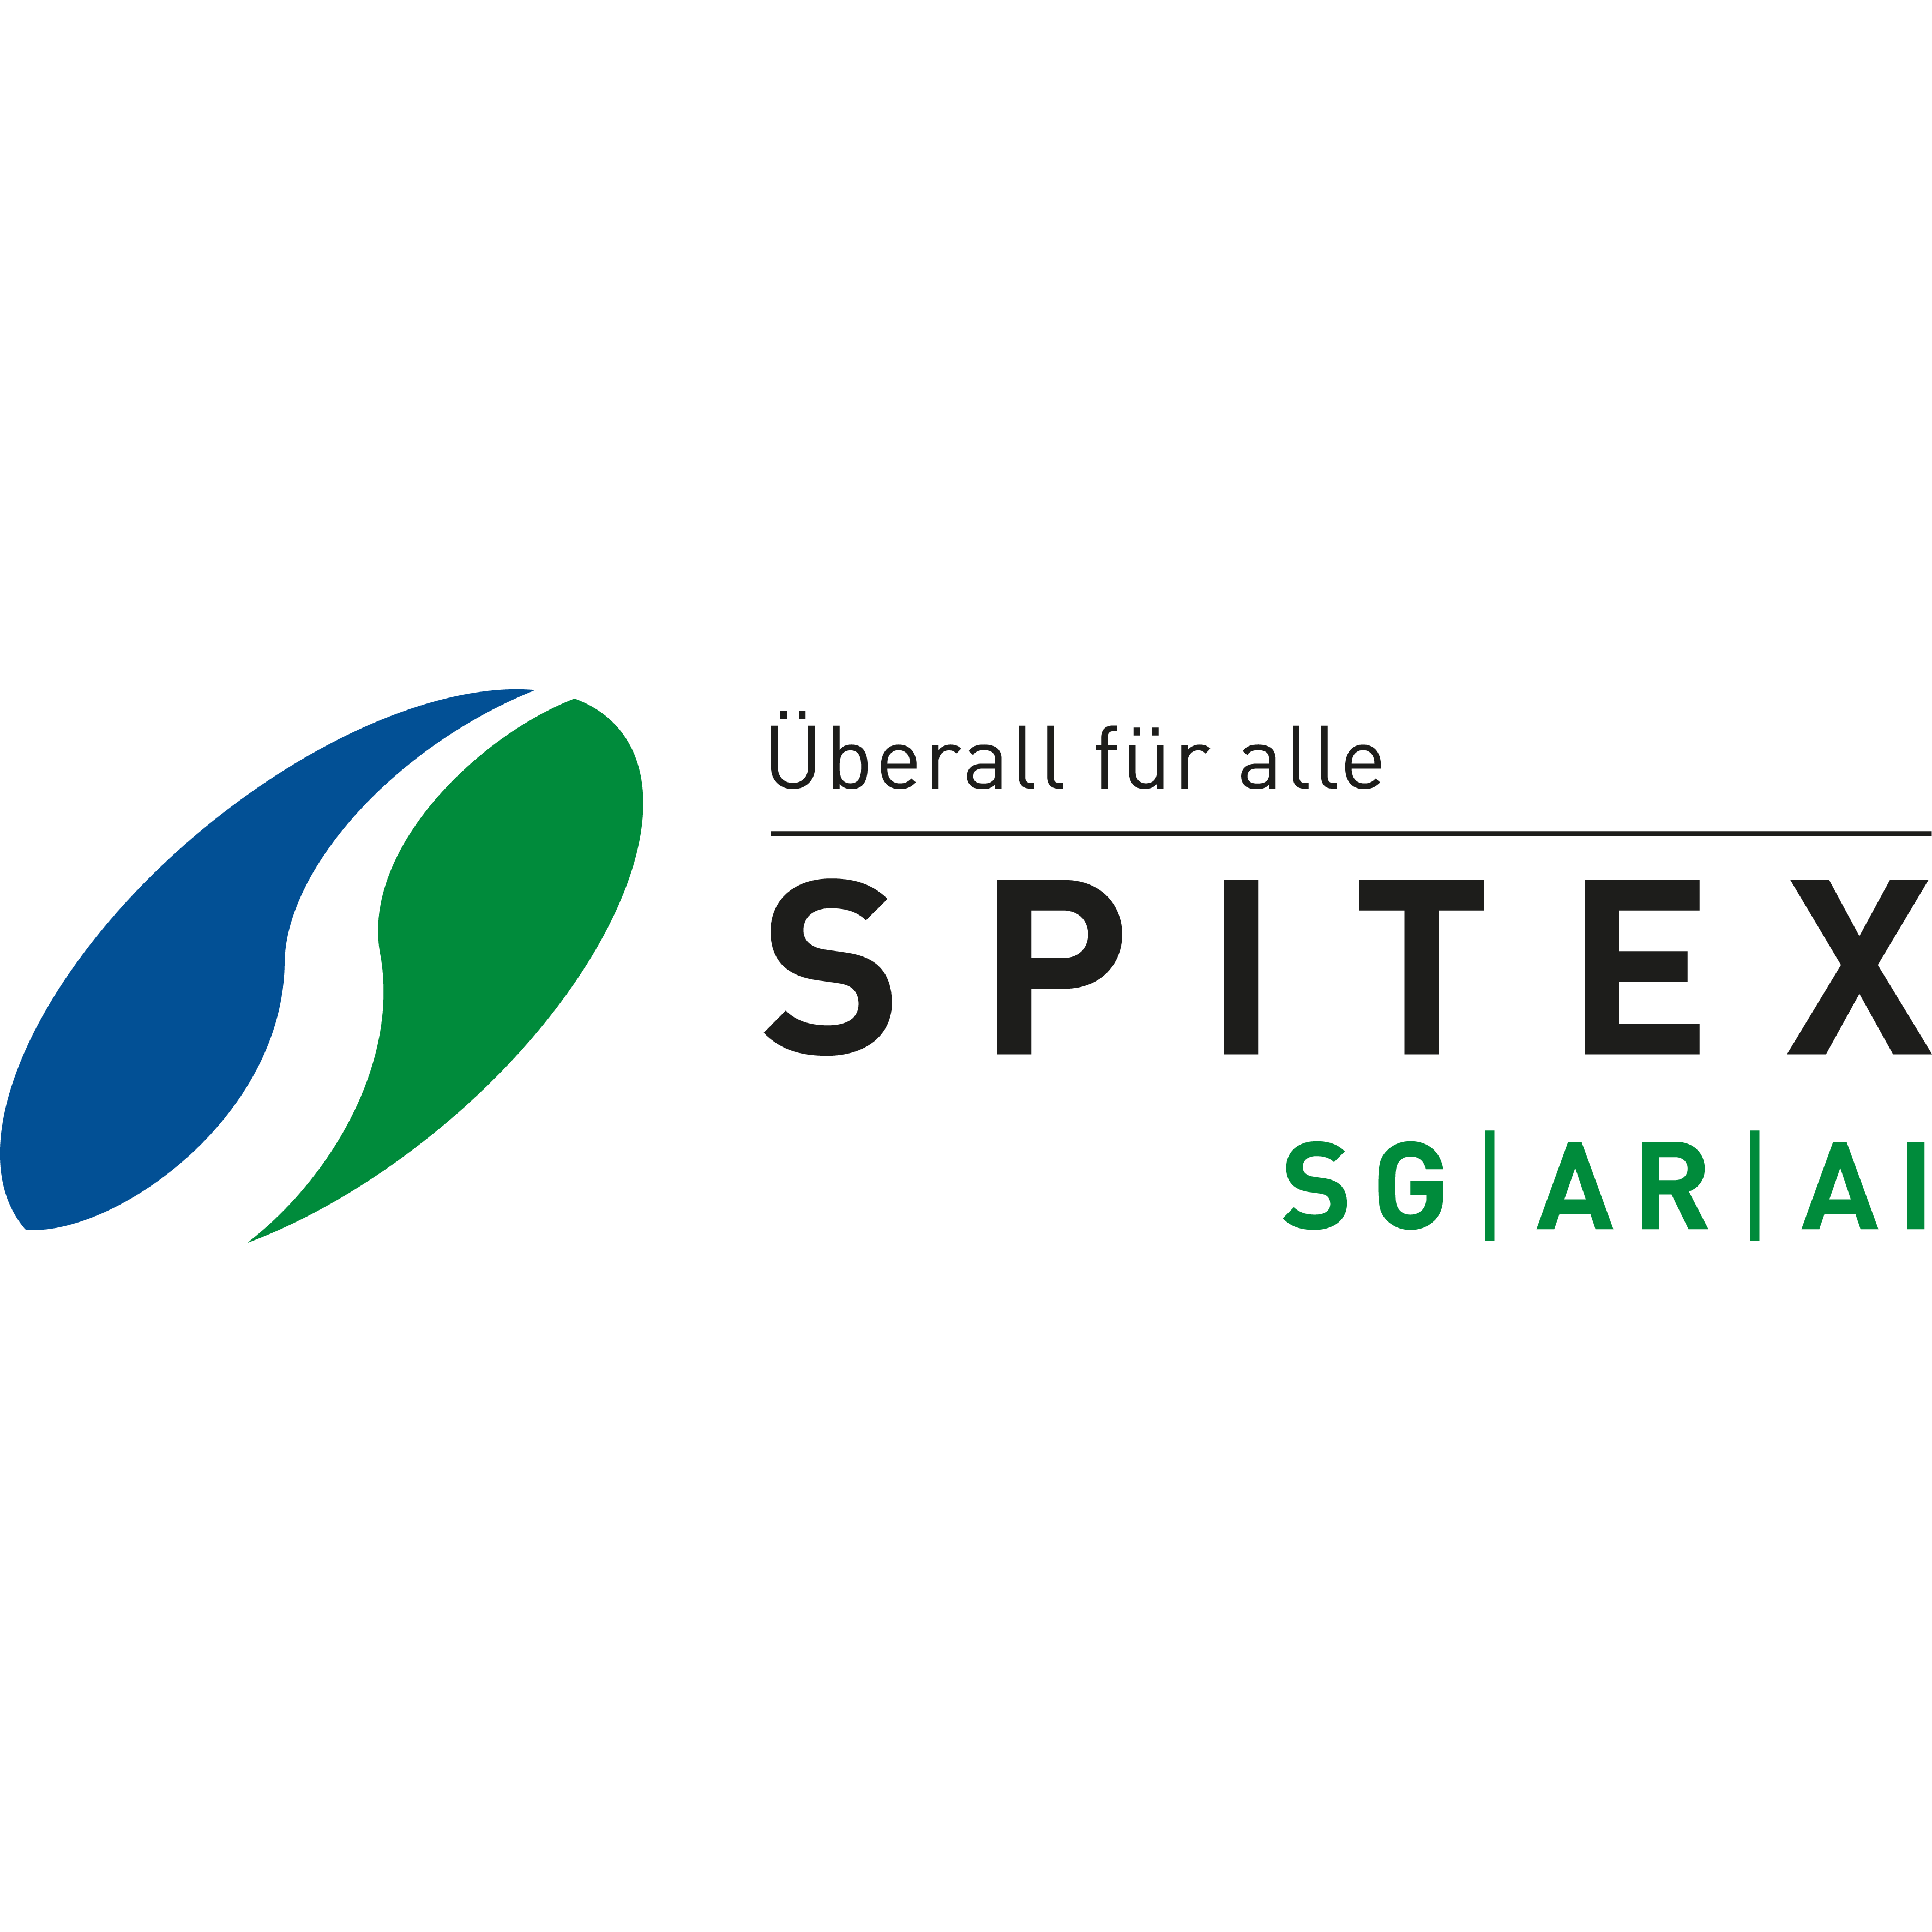 Spitex Verband SG|AR|AI Logo